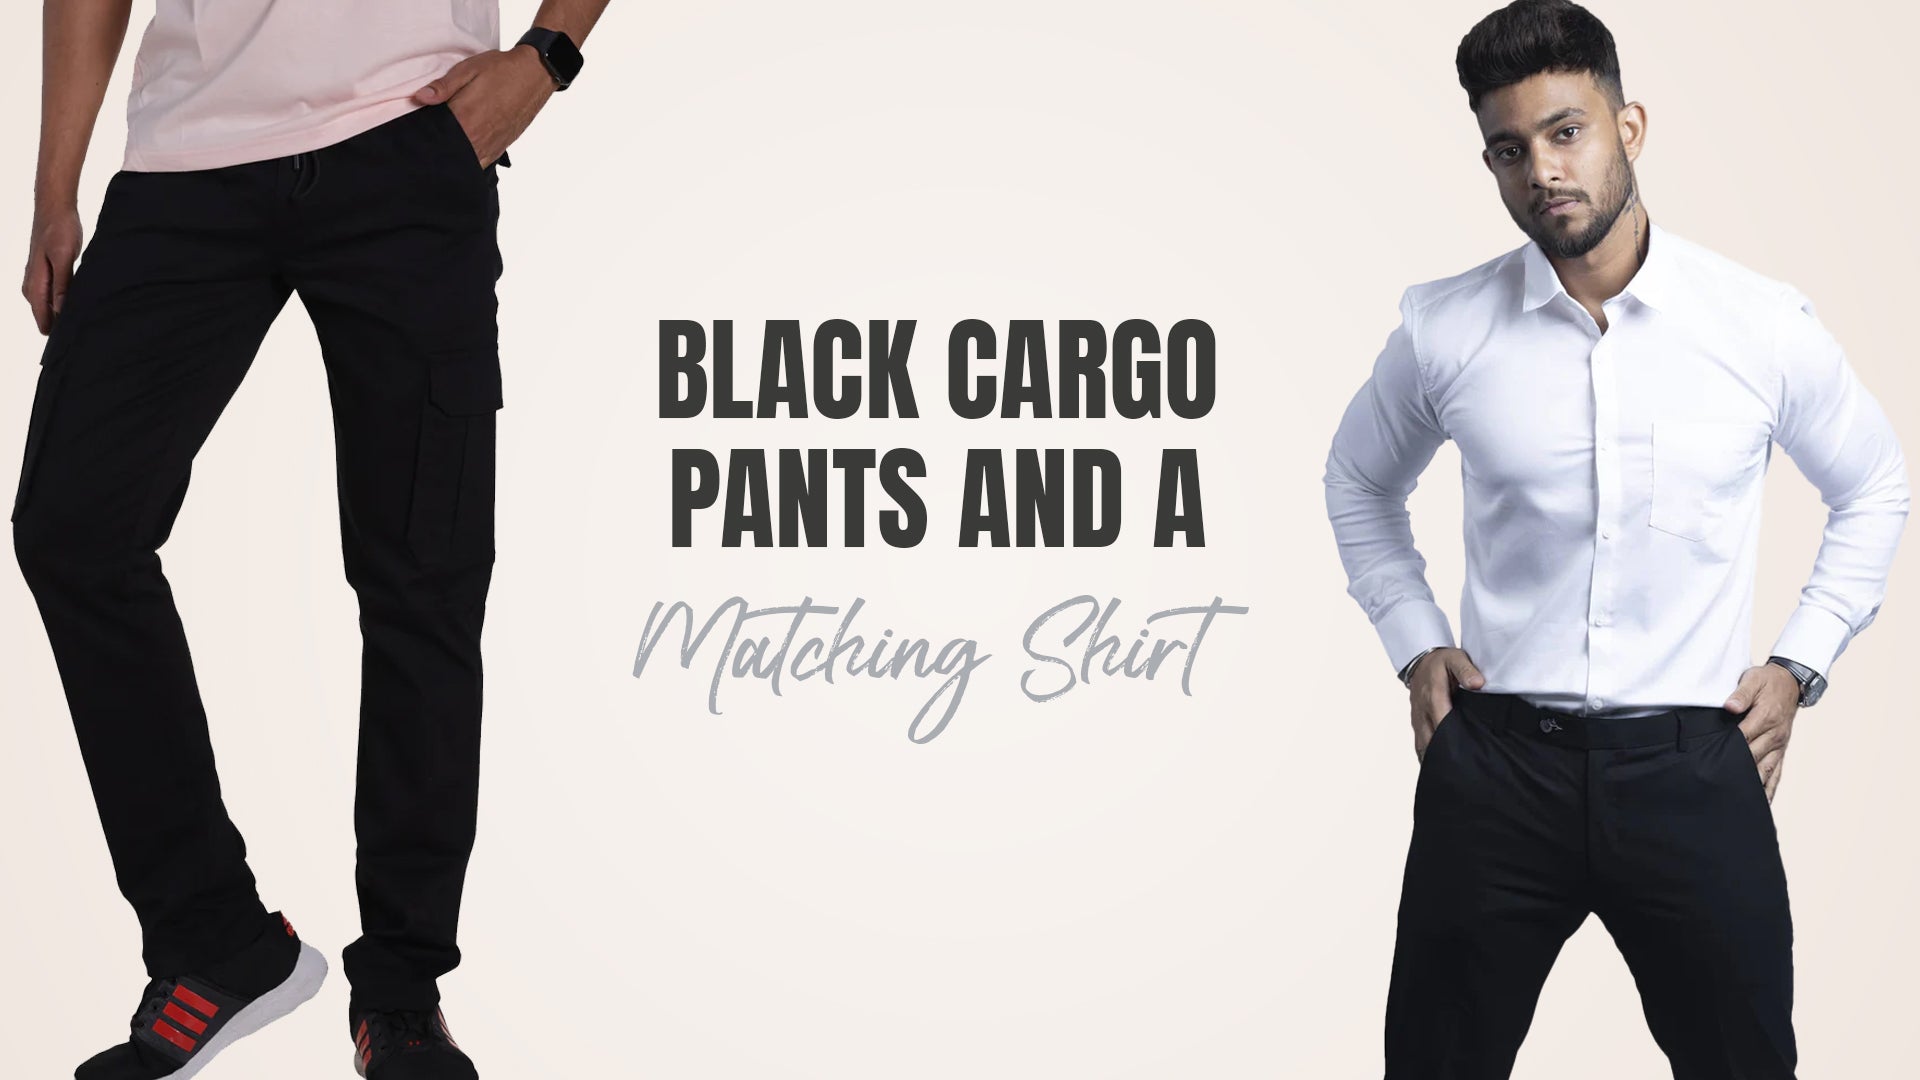 Black Shirt with Brown Pants | Hockerty